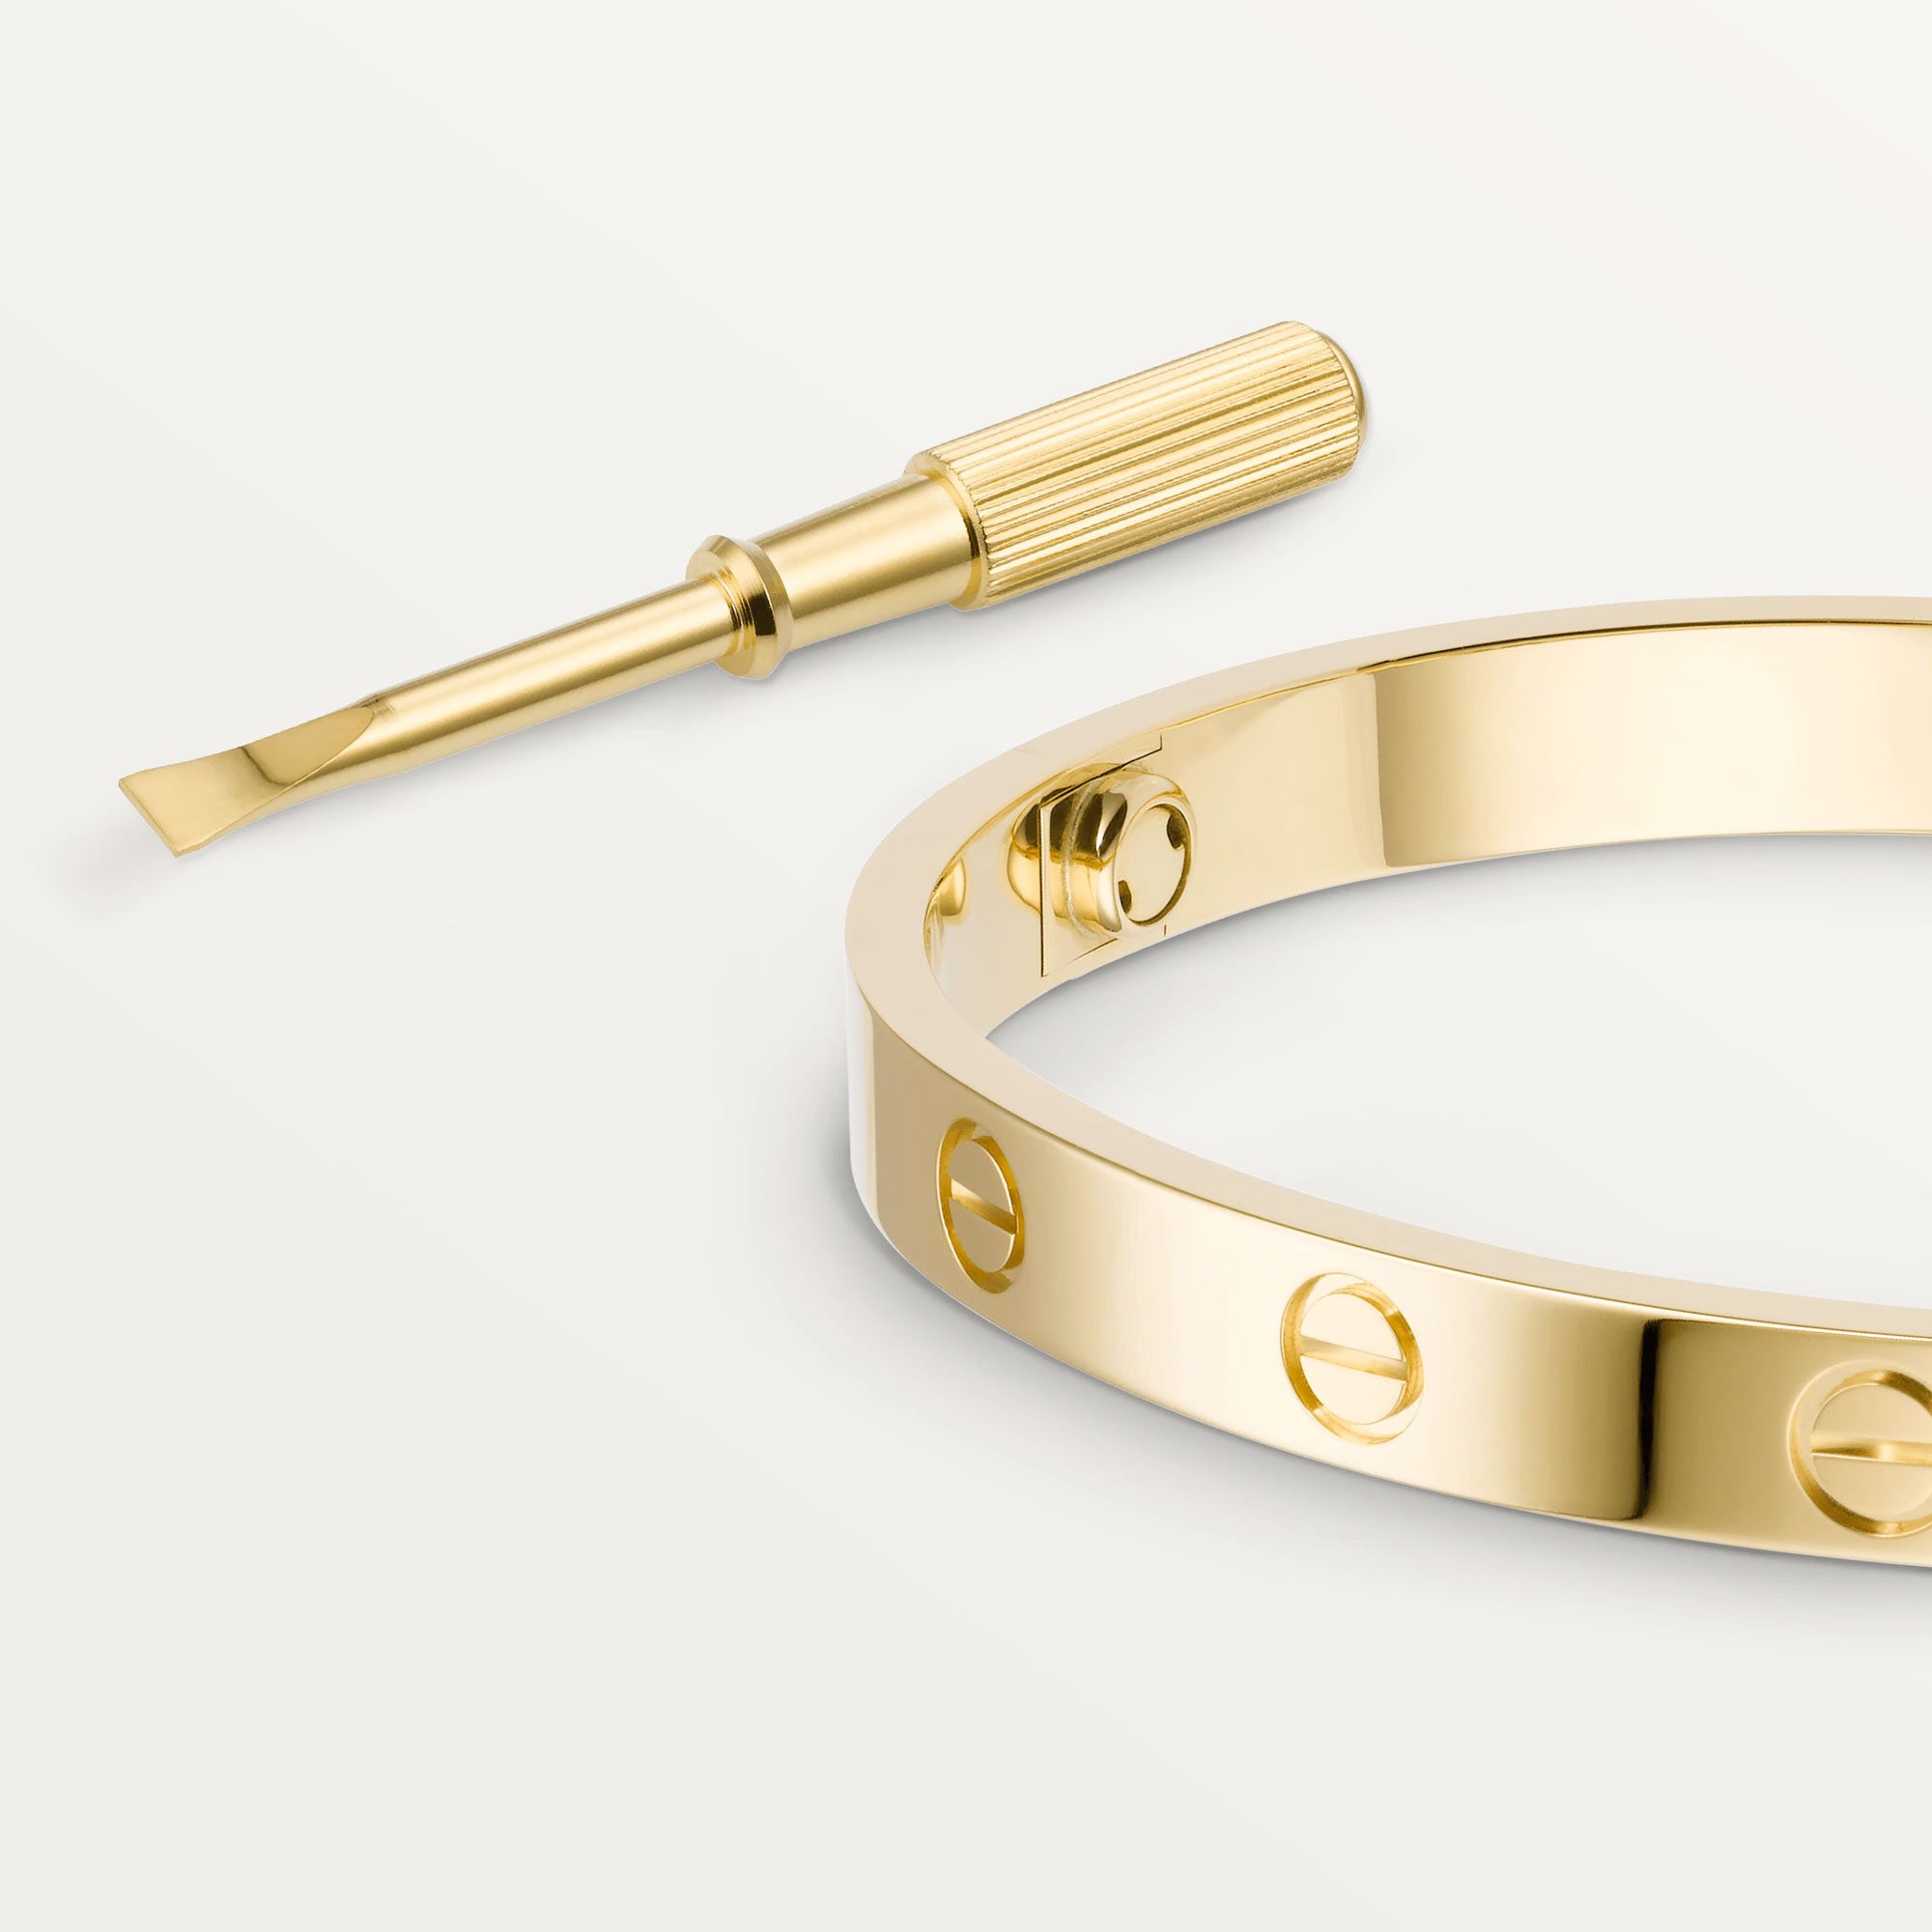 A modern design 18k gold bracelet by Cartier.